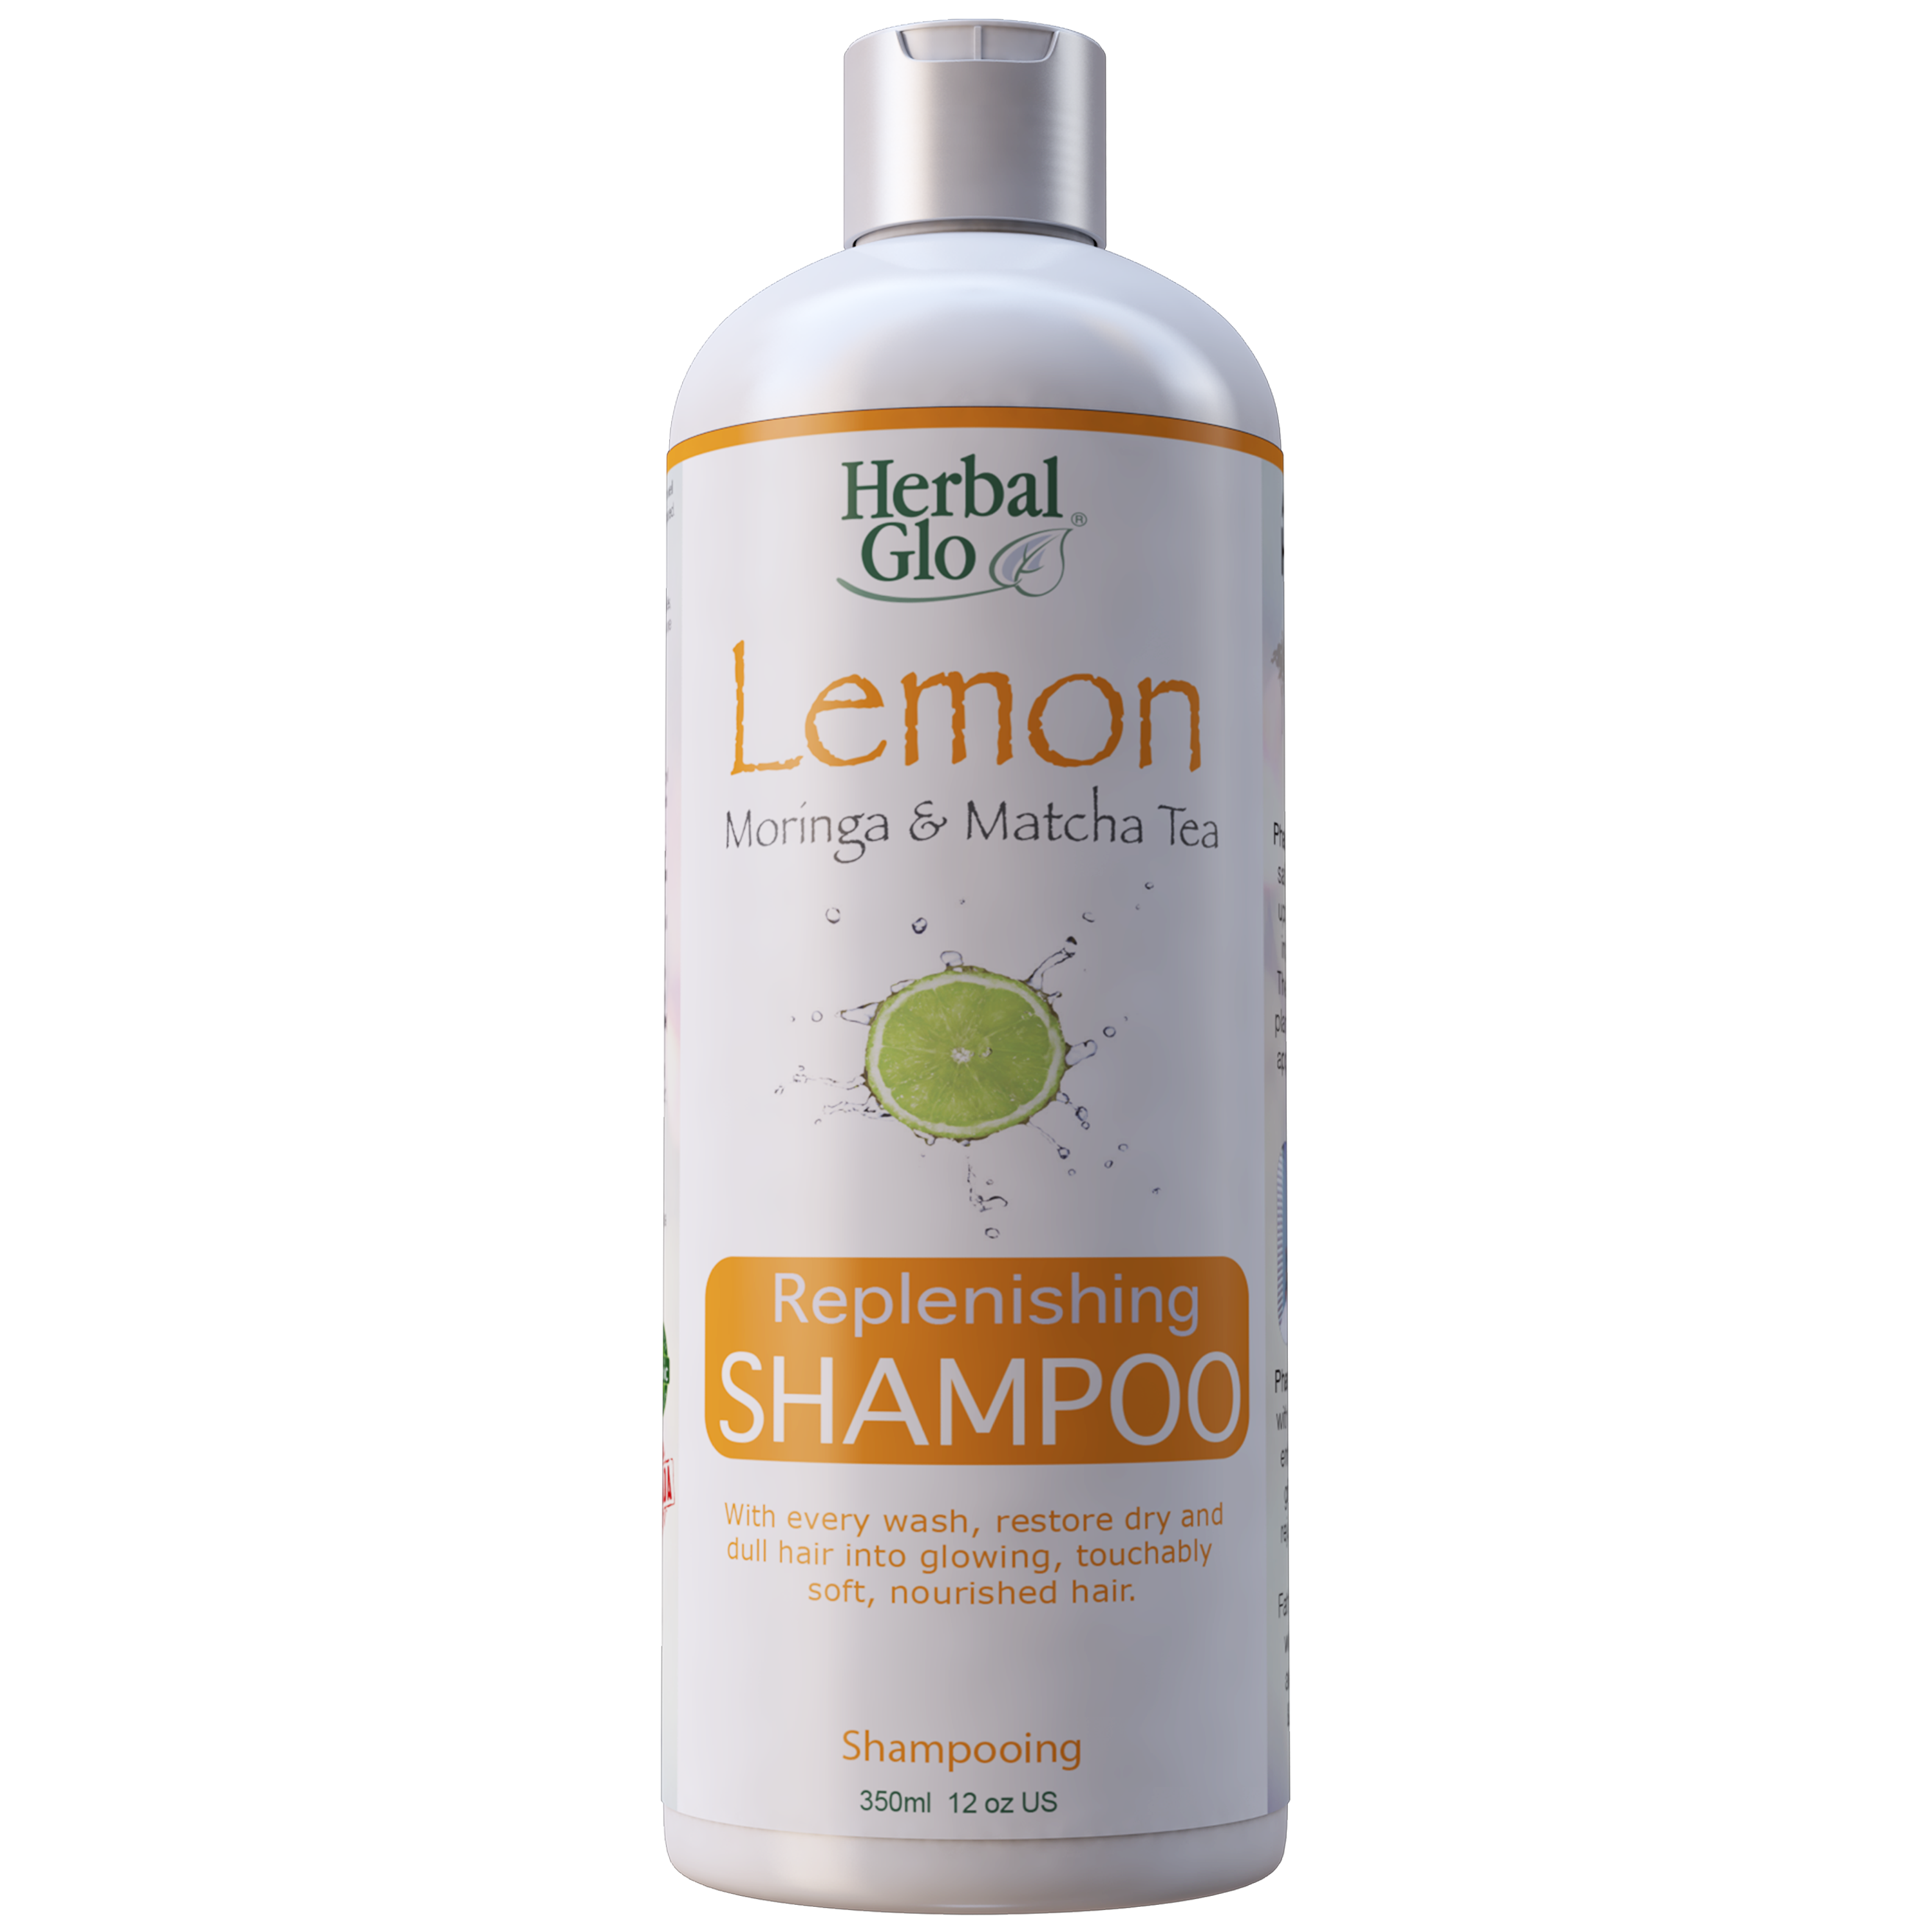 bottle of lemon moringa matcha tea replenishing shampoo